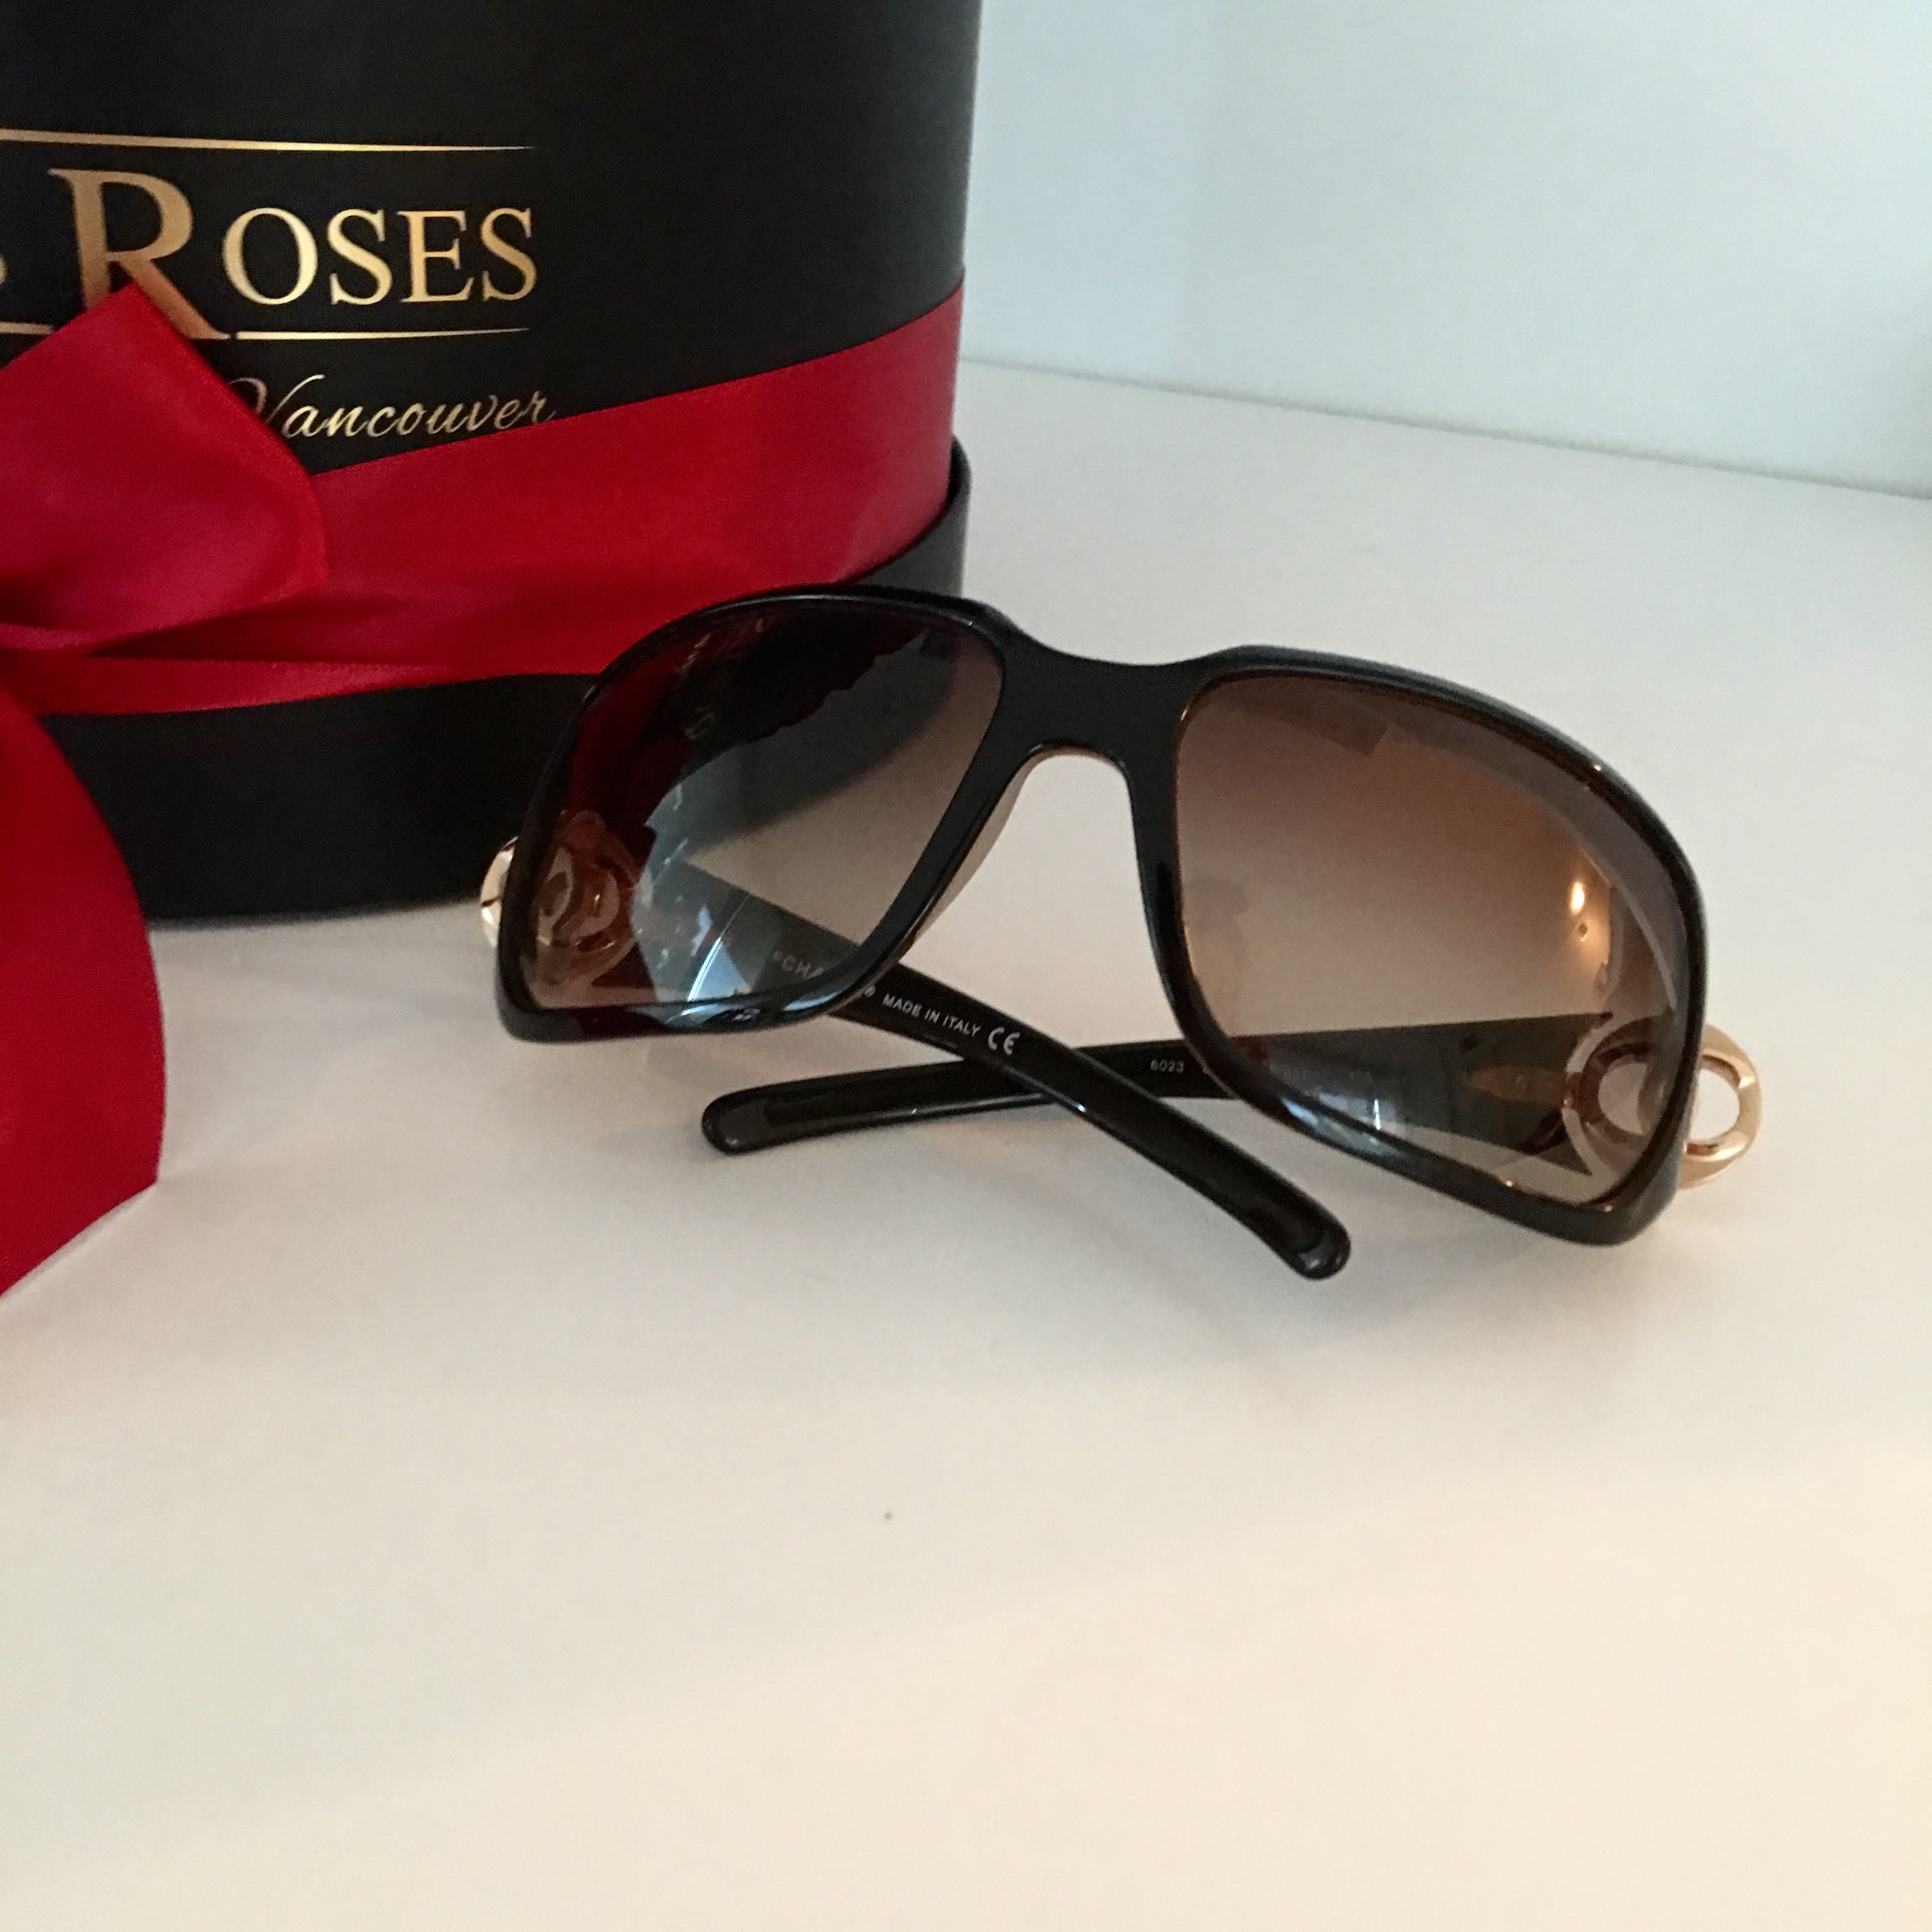 Chanel sunglasses – Beccas Bags